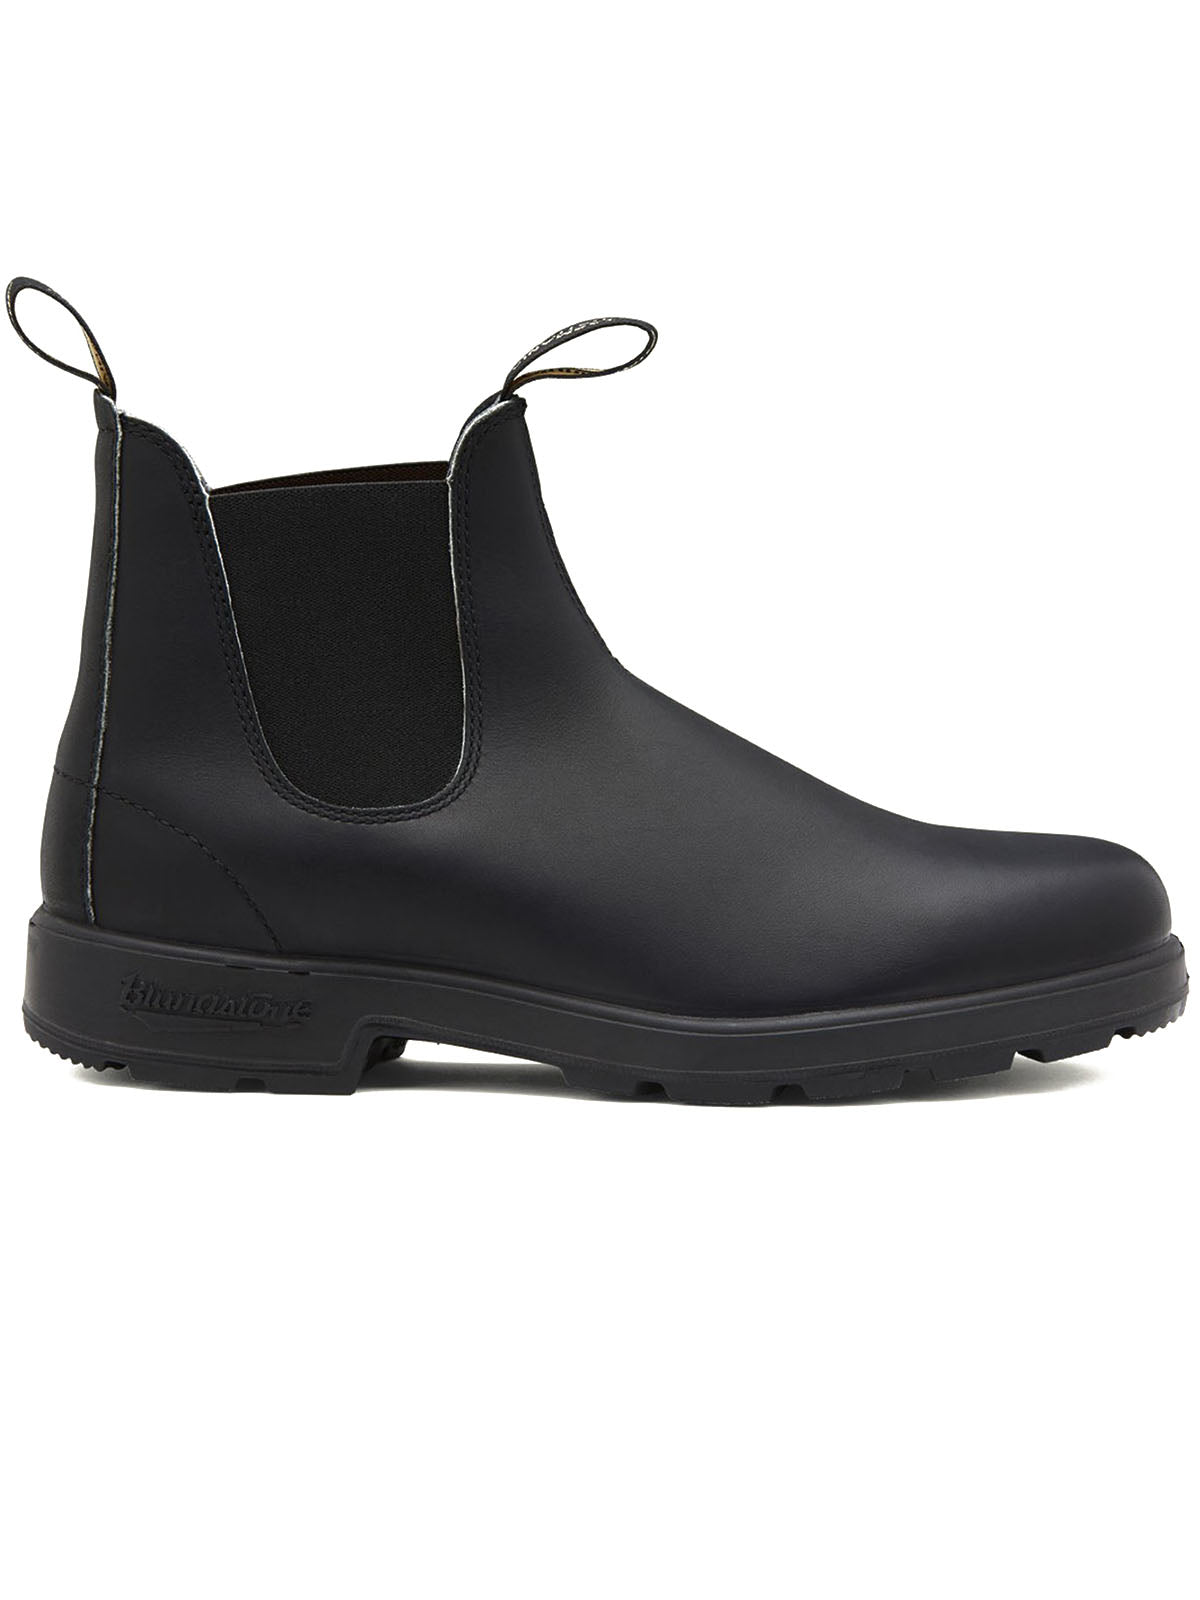 Stivali Uomo Blundstone - 510 Premium Leather Lined Elastic Sided Boot - Nero